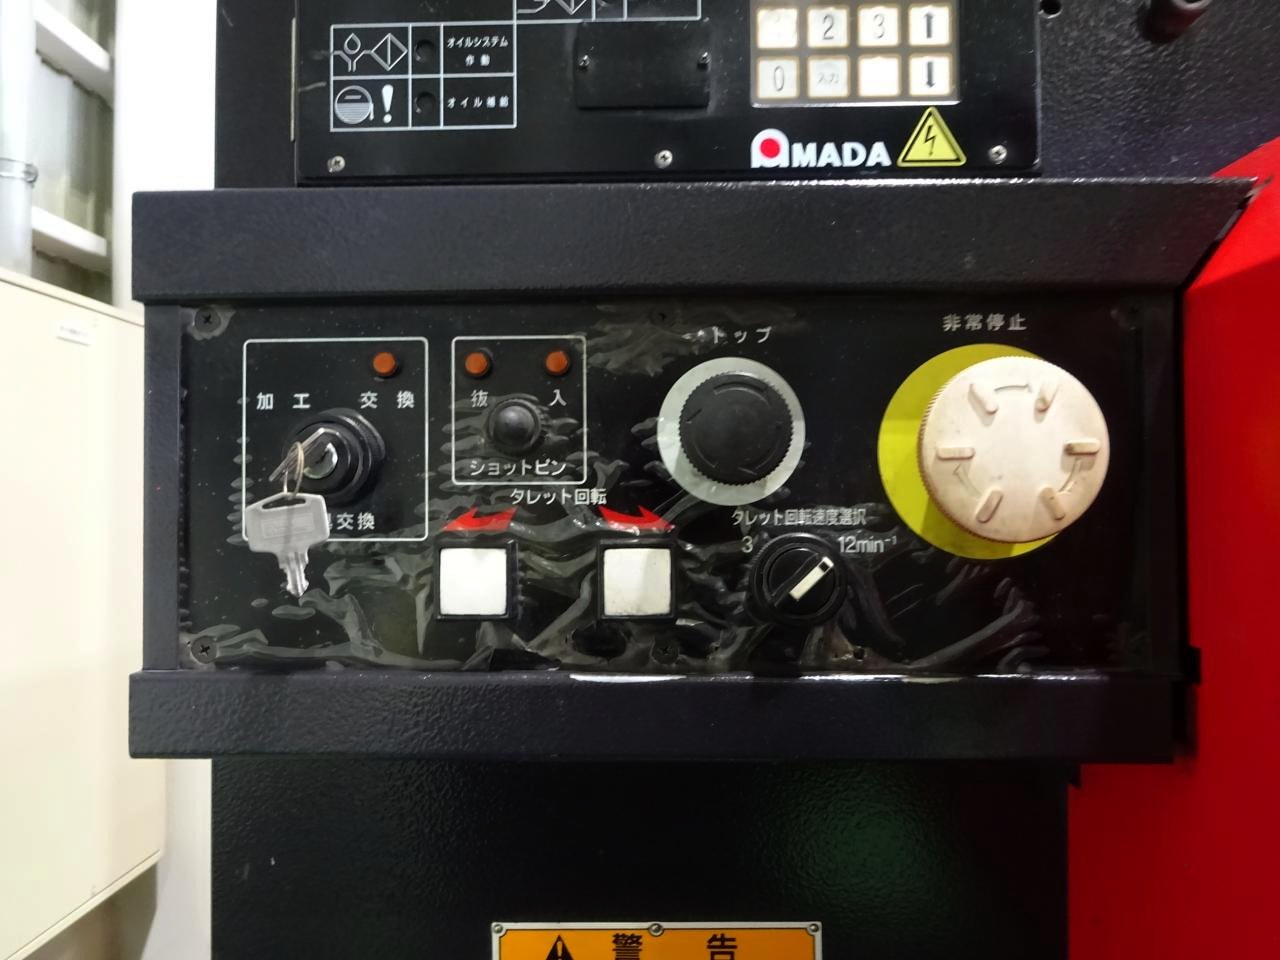 EMZ-3610NTの操作ボタン類